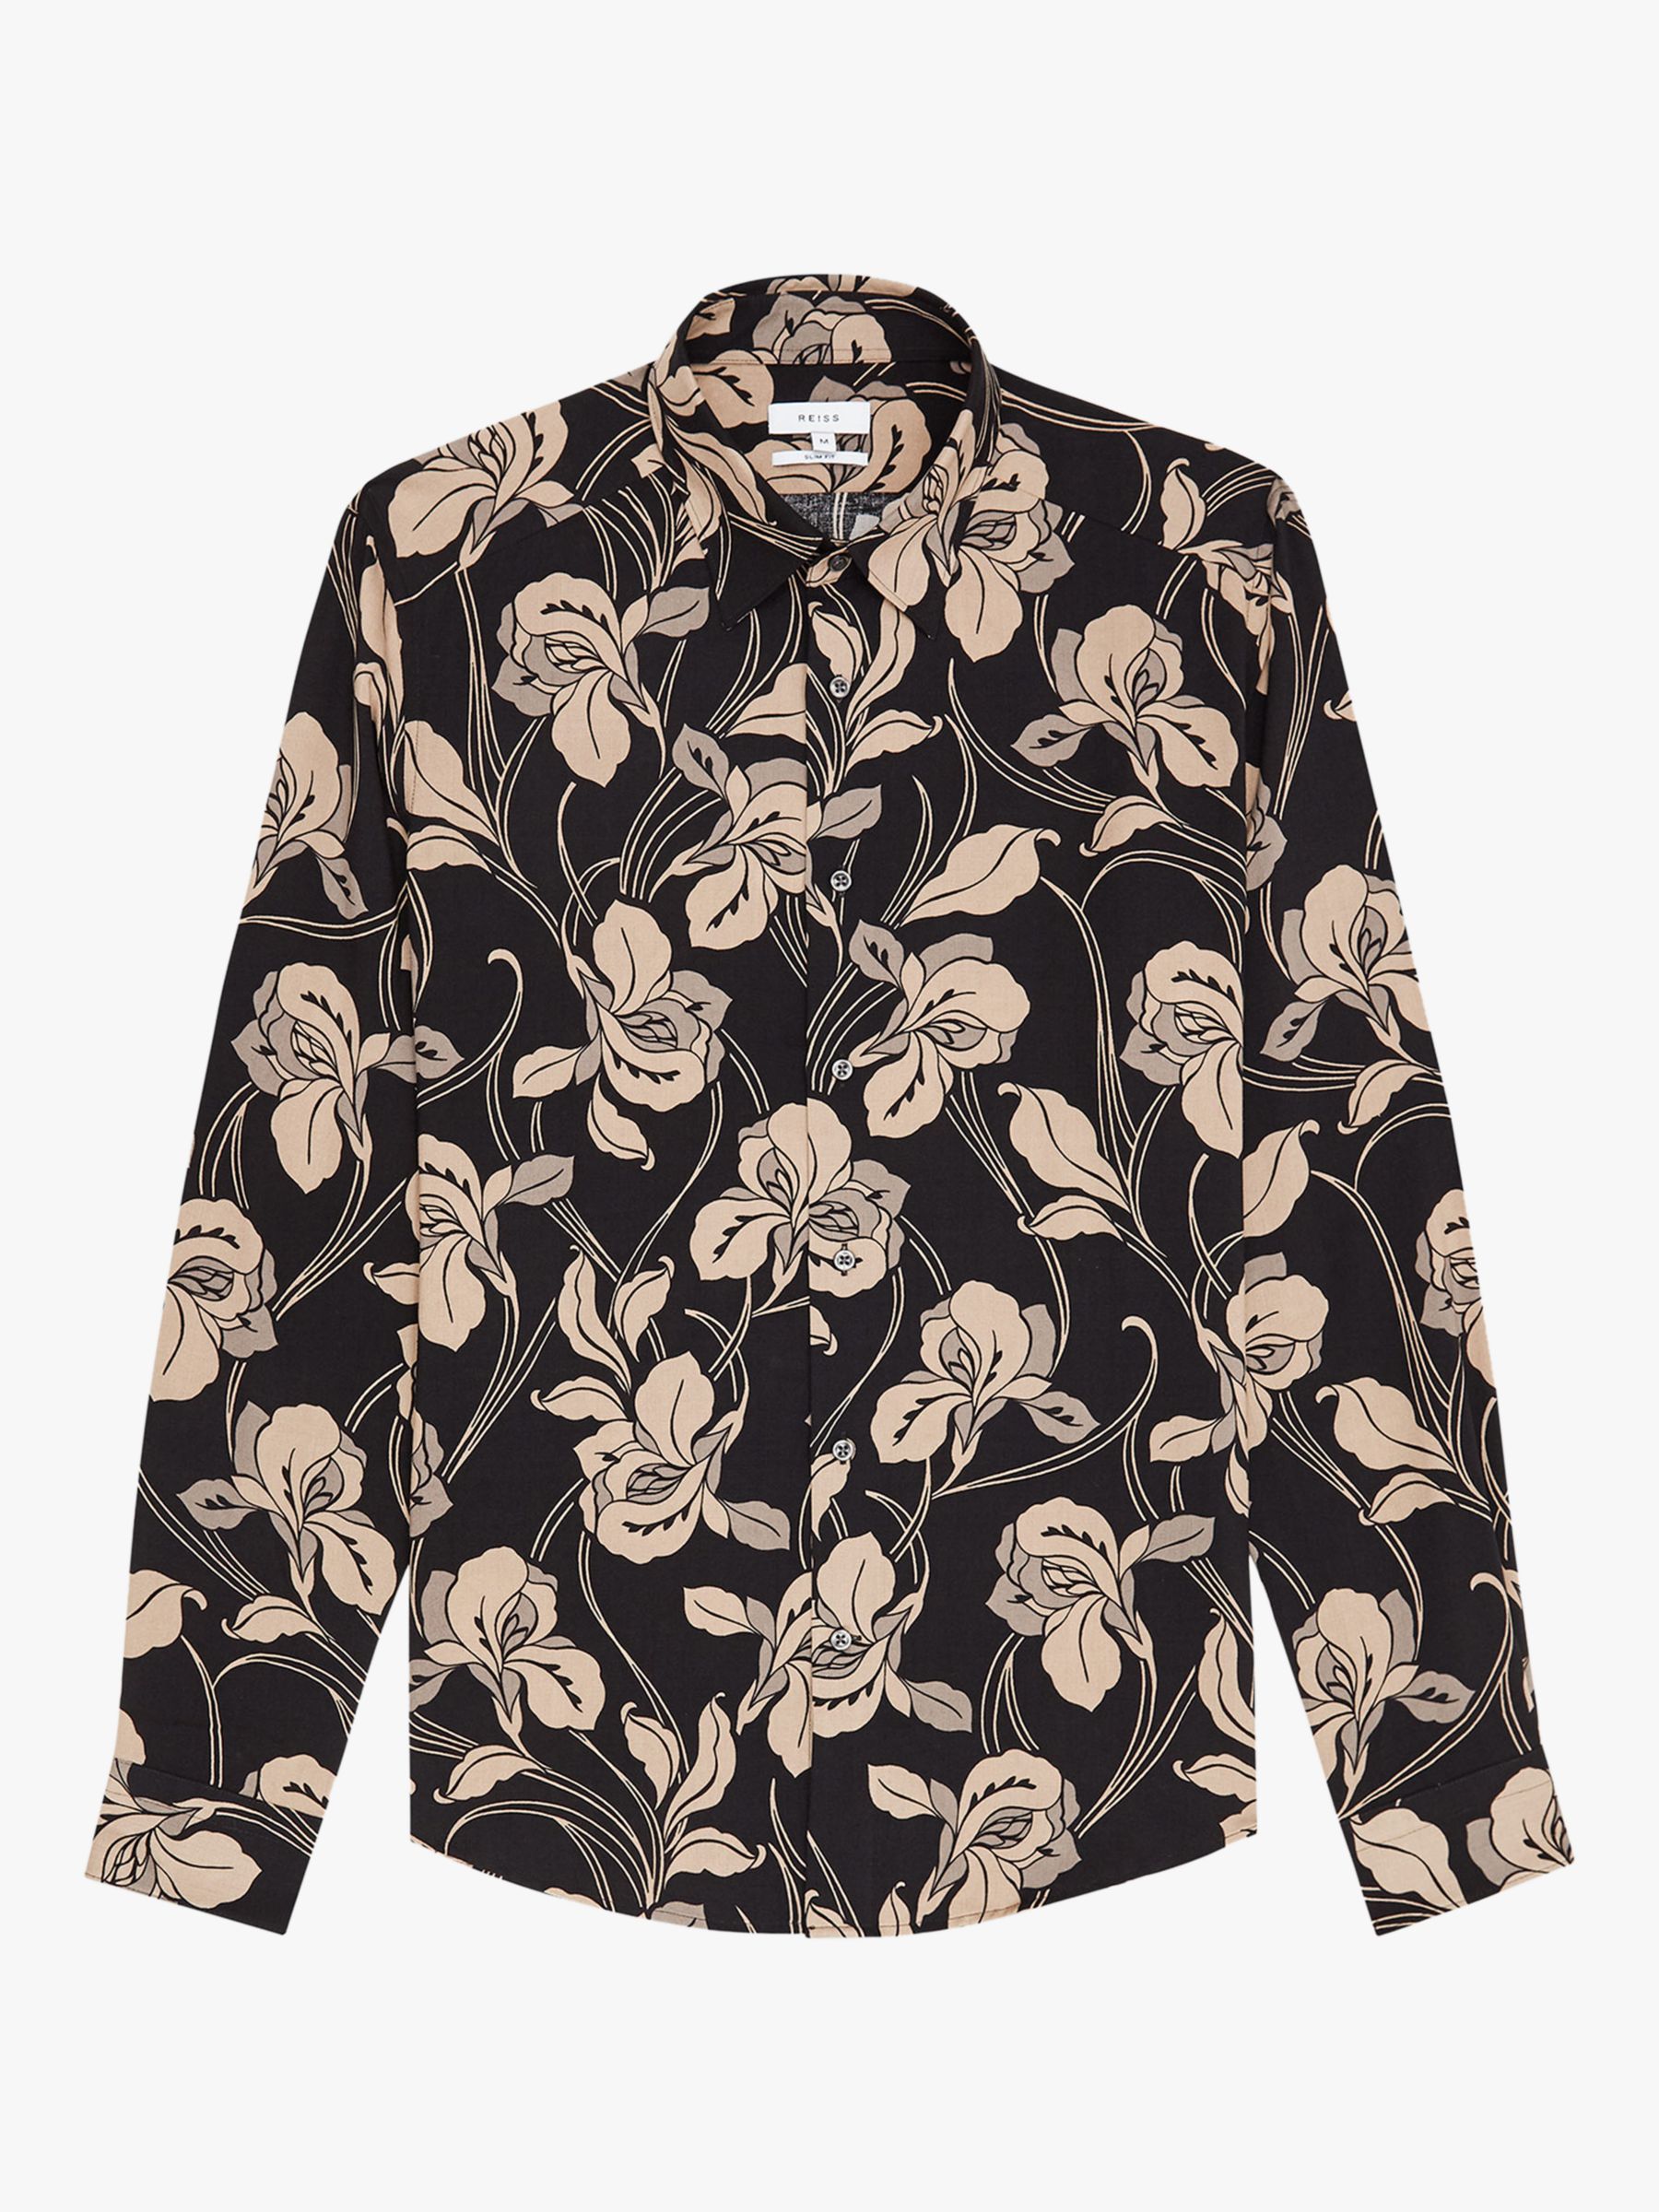 Reiss Brave Floral Print Shirt, Black at John Lewis & Partners